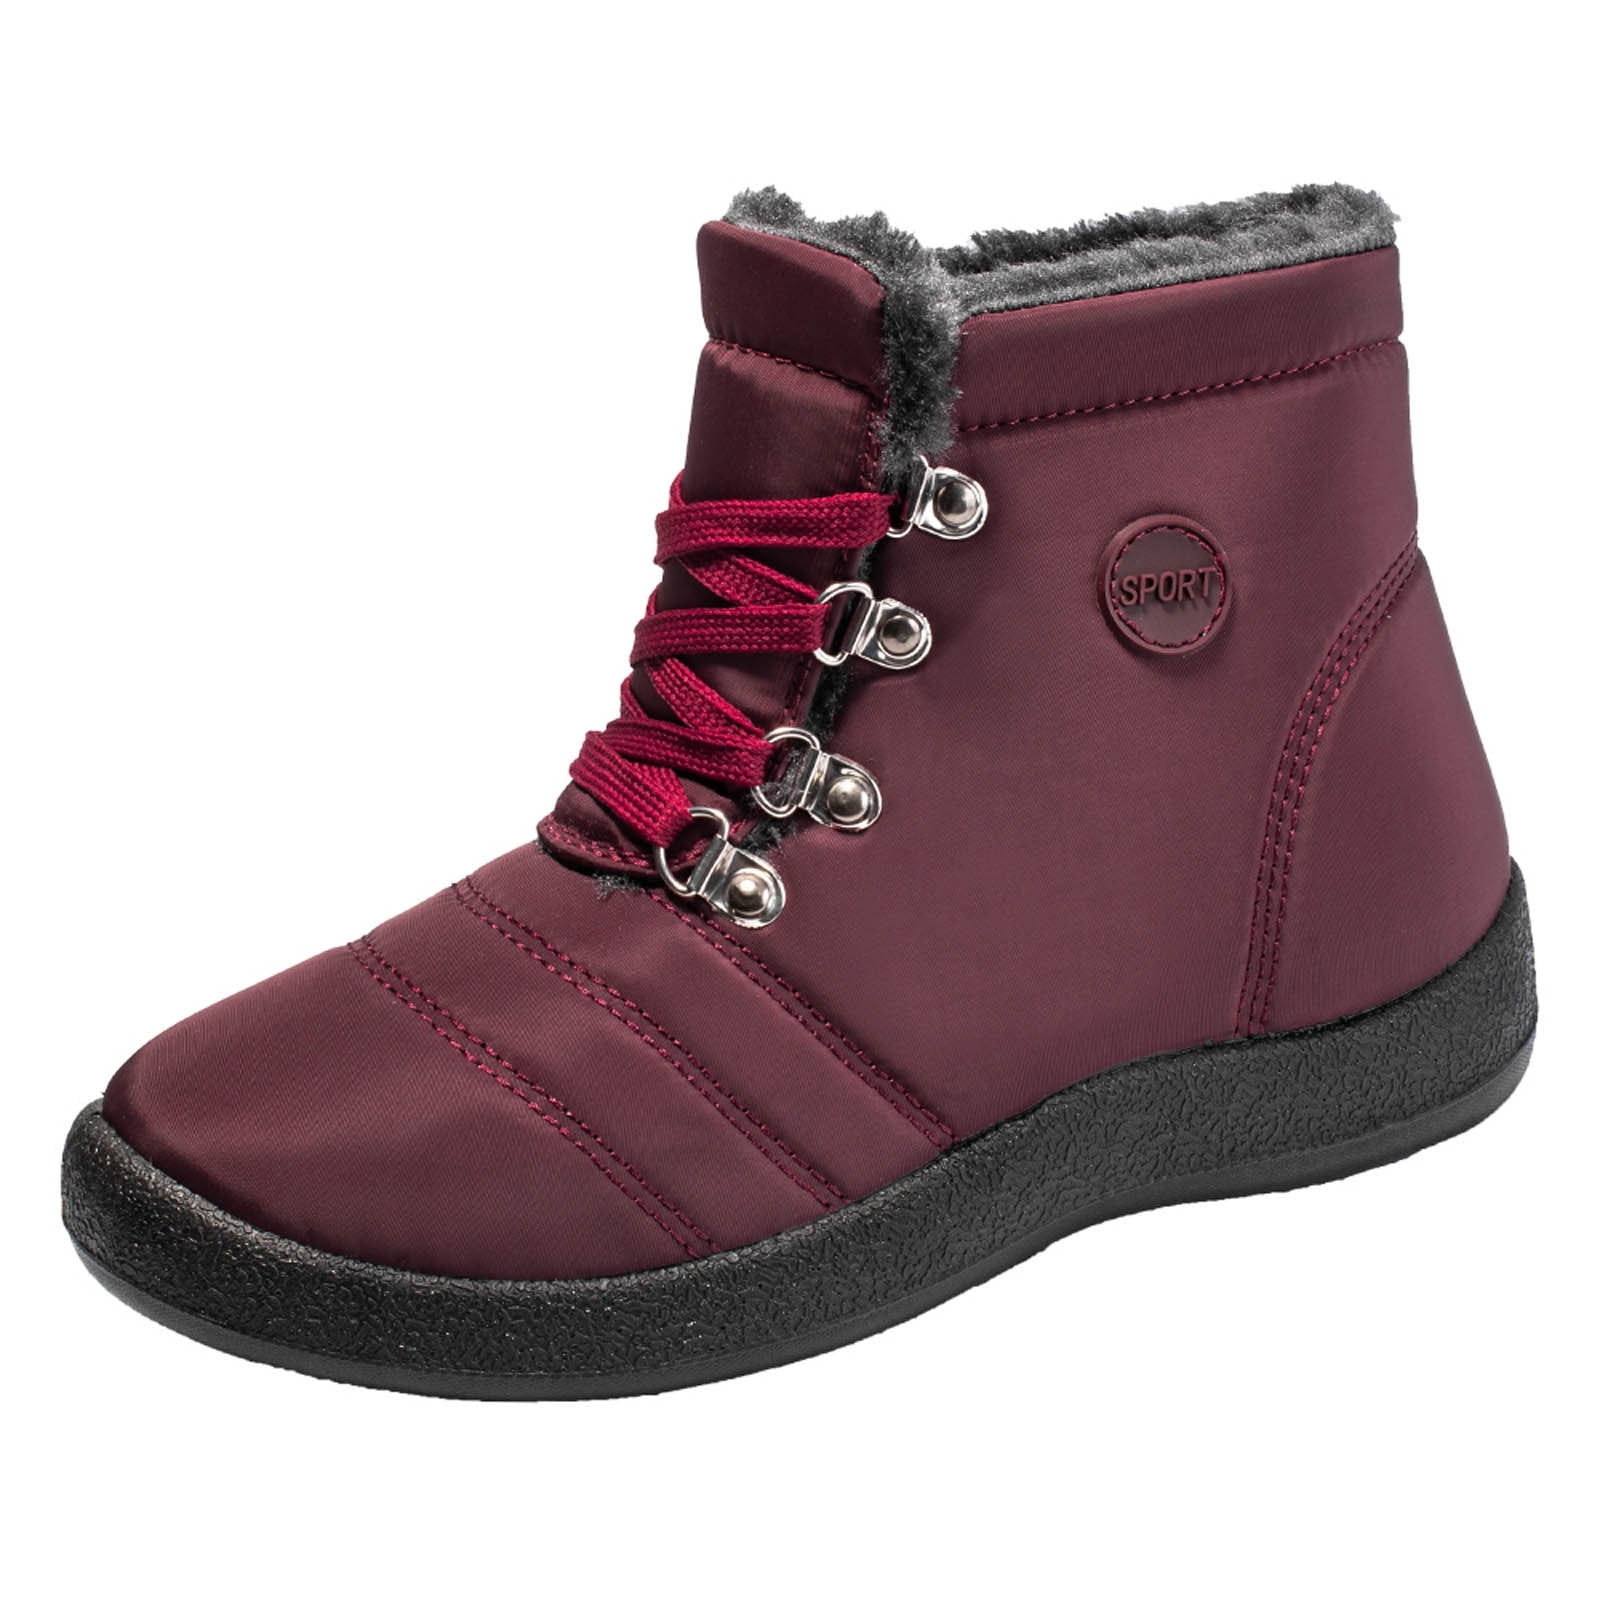 Puntoco Women'S Winter Boots Clearance,Winter Hiking Shoes Warm Women'S ...